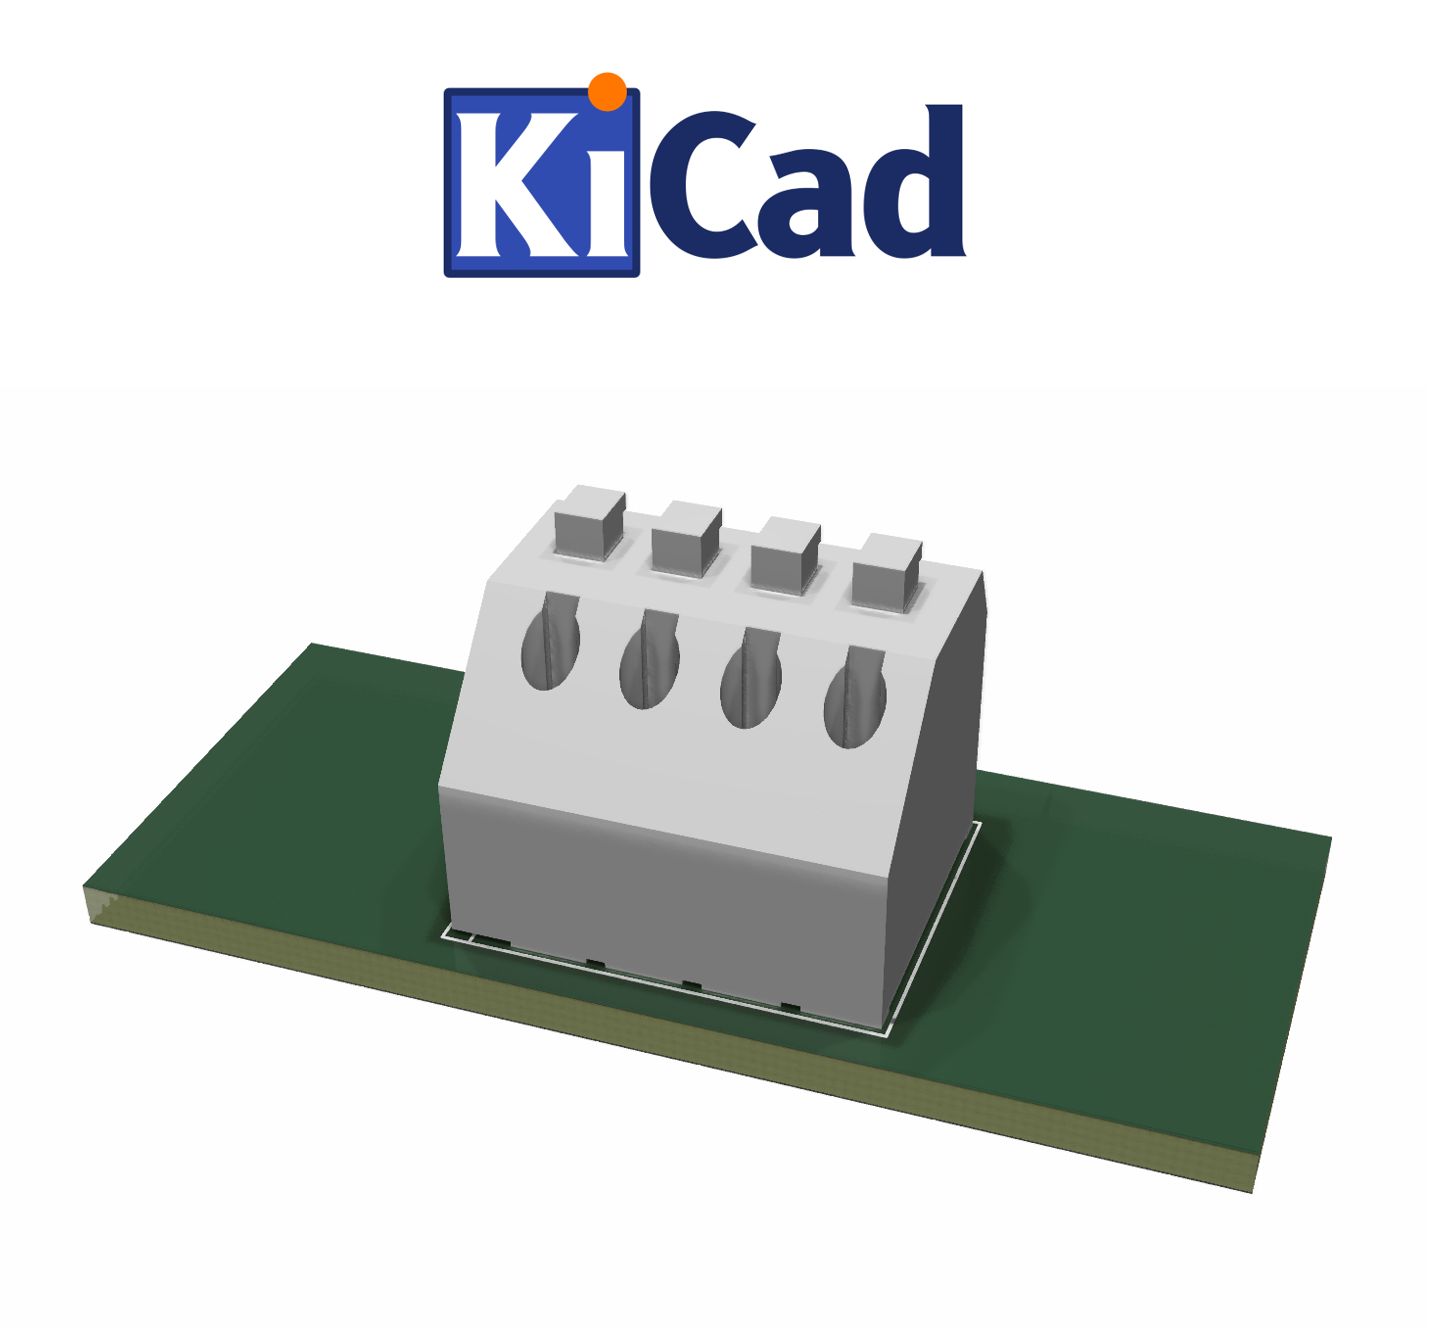 Klemblok Drukconnector 3.50mm pitch KF250B-3.50 2P-8P KiCad 6+